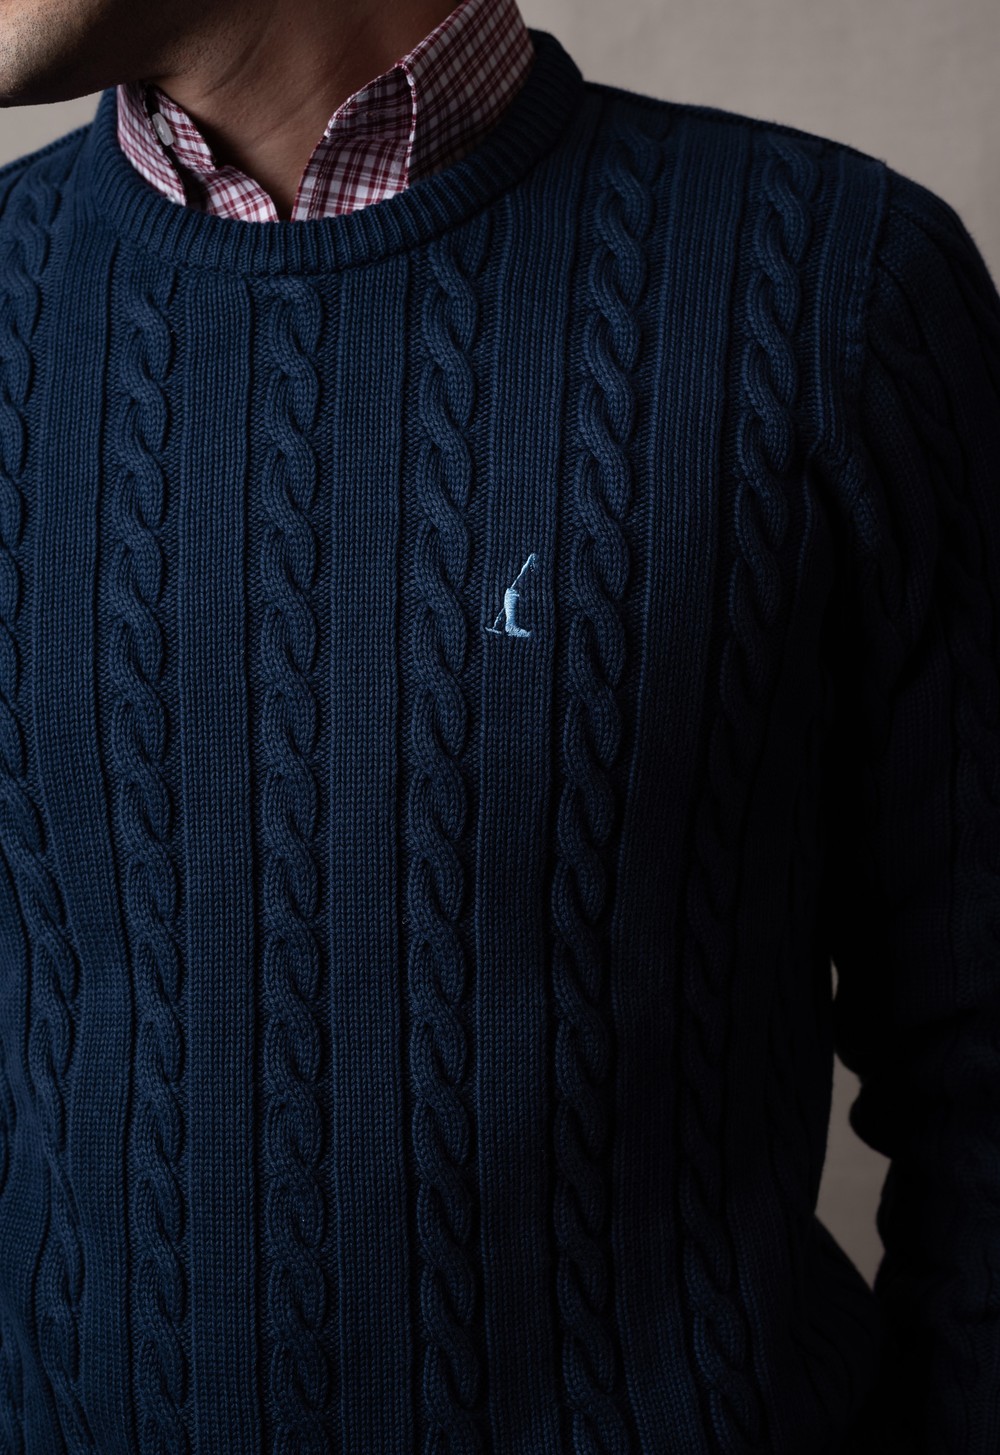 Sweater Lc 15885 Azul Marinho